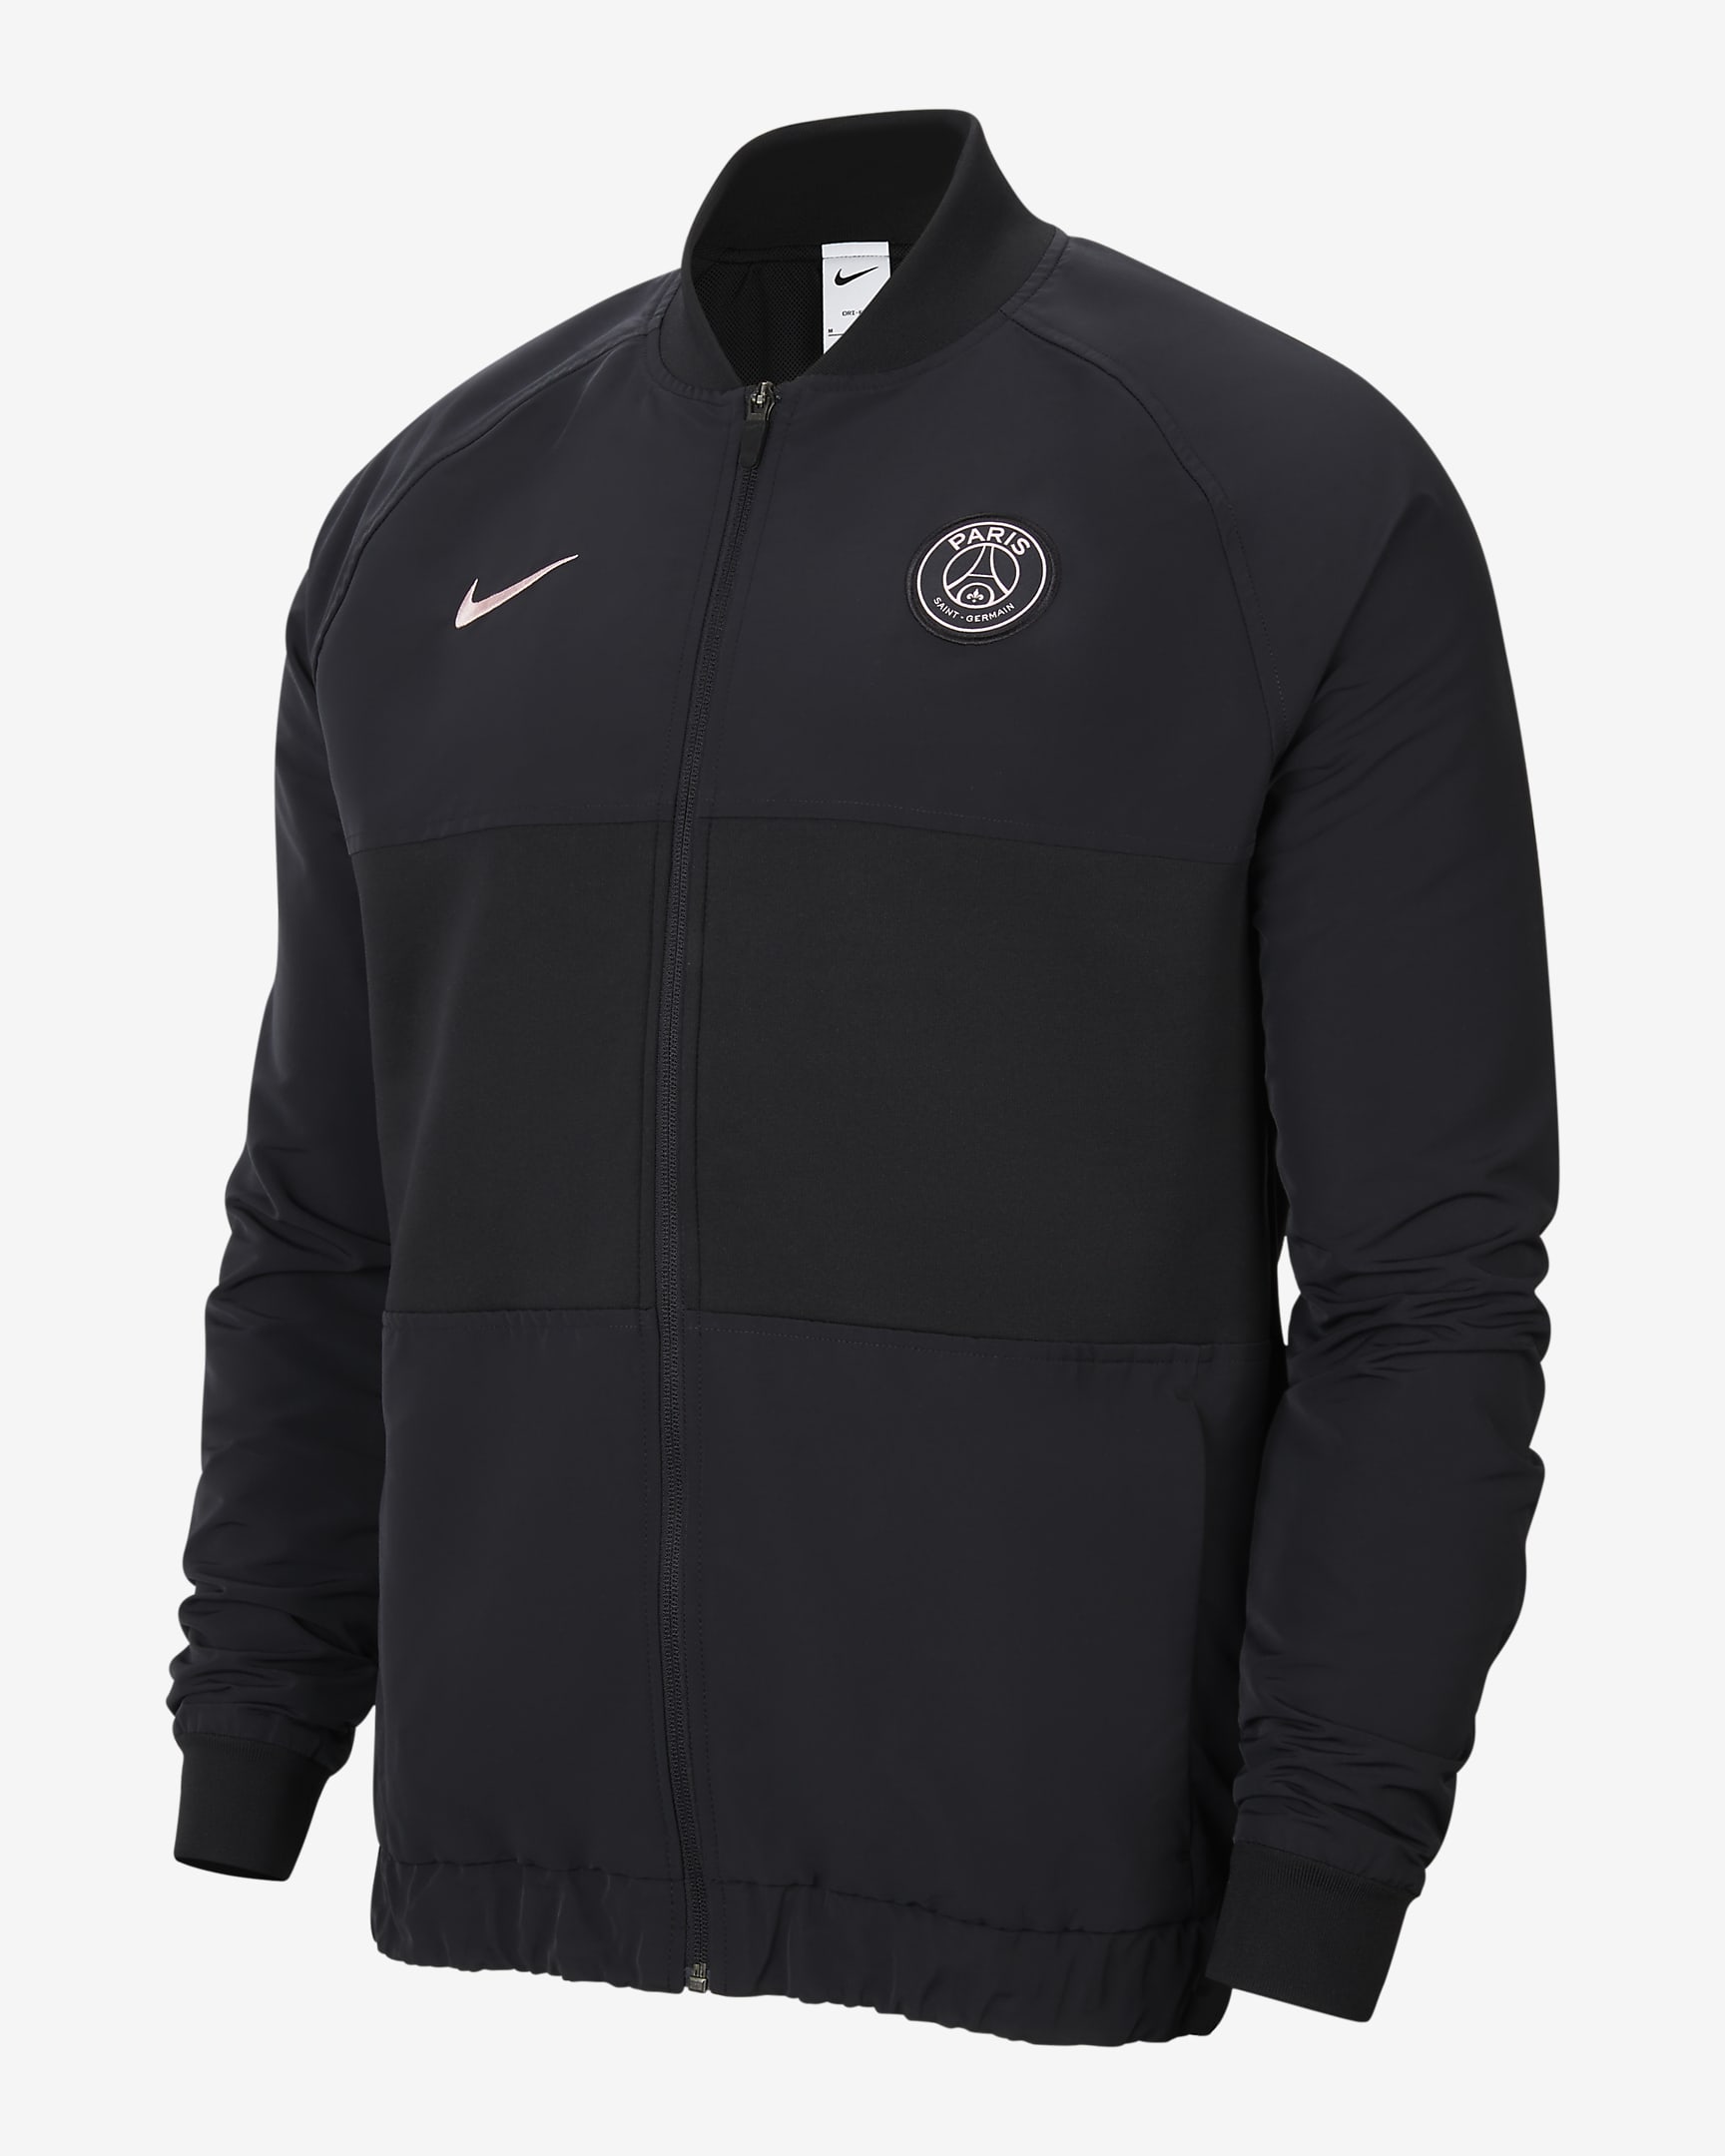 Paris Saint-Germain Men's Nike Dri-FIT Full-Zip Soccer Jacket. Nike JP